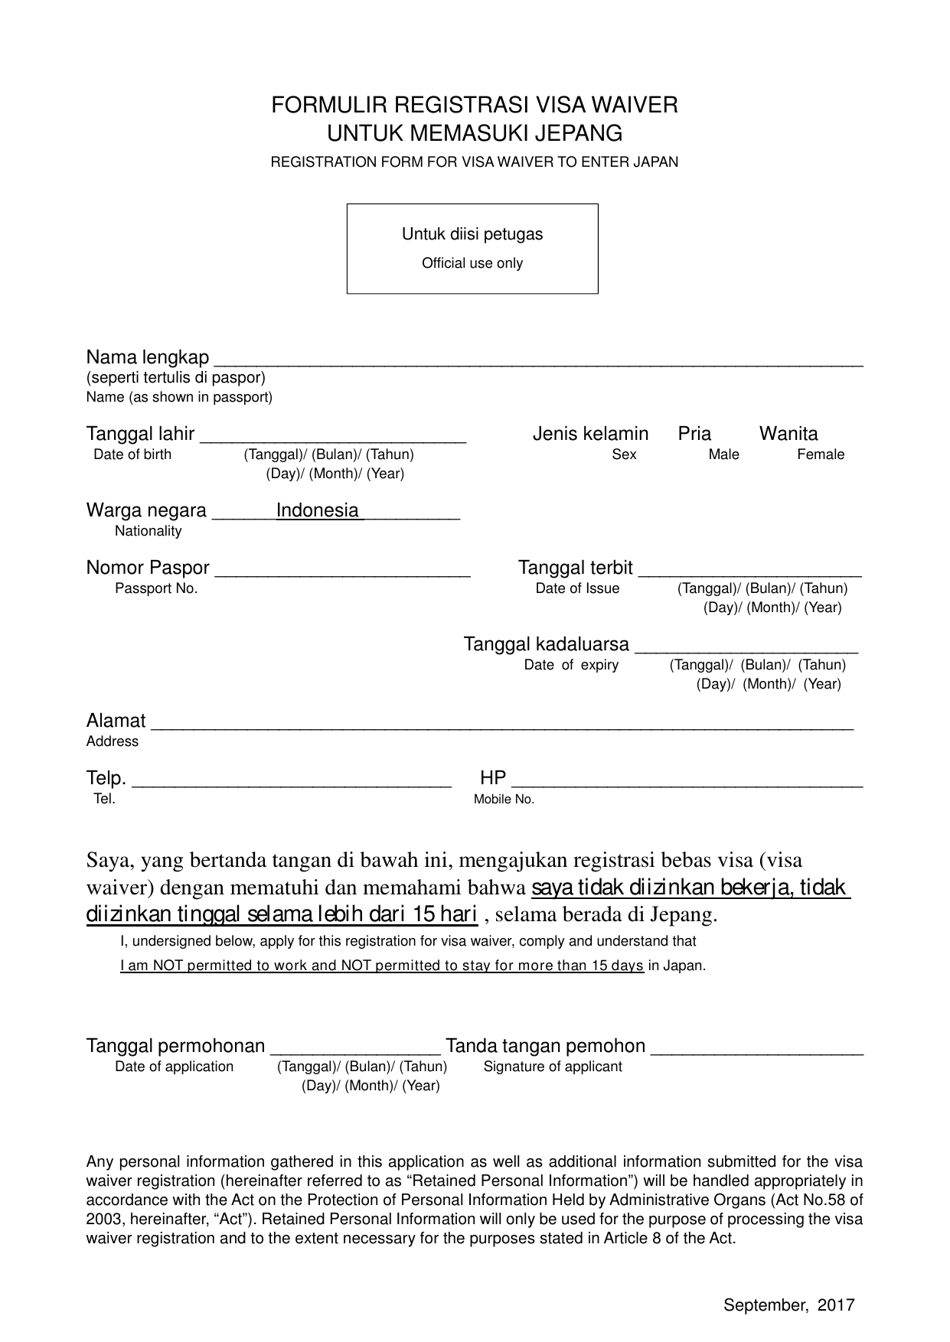 Registration Form for Visa Waiver to Enter Japan - Japan Visa Application Center - Jakarta, Indonesia (English / Indonesian (Bahasa Indonesia)), Page 1